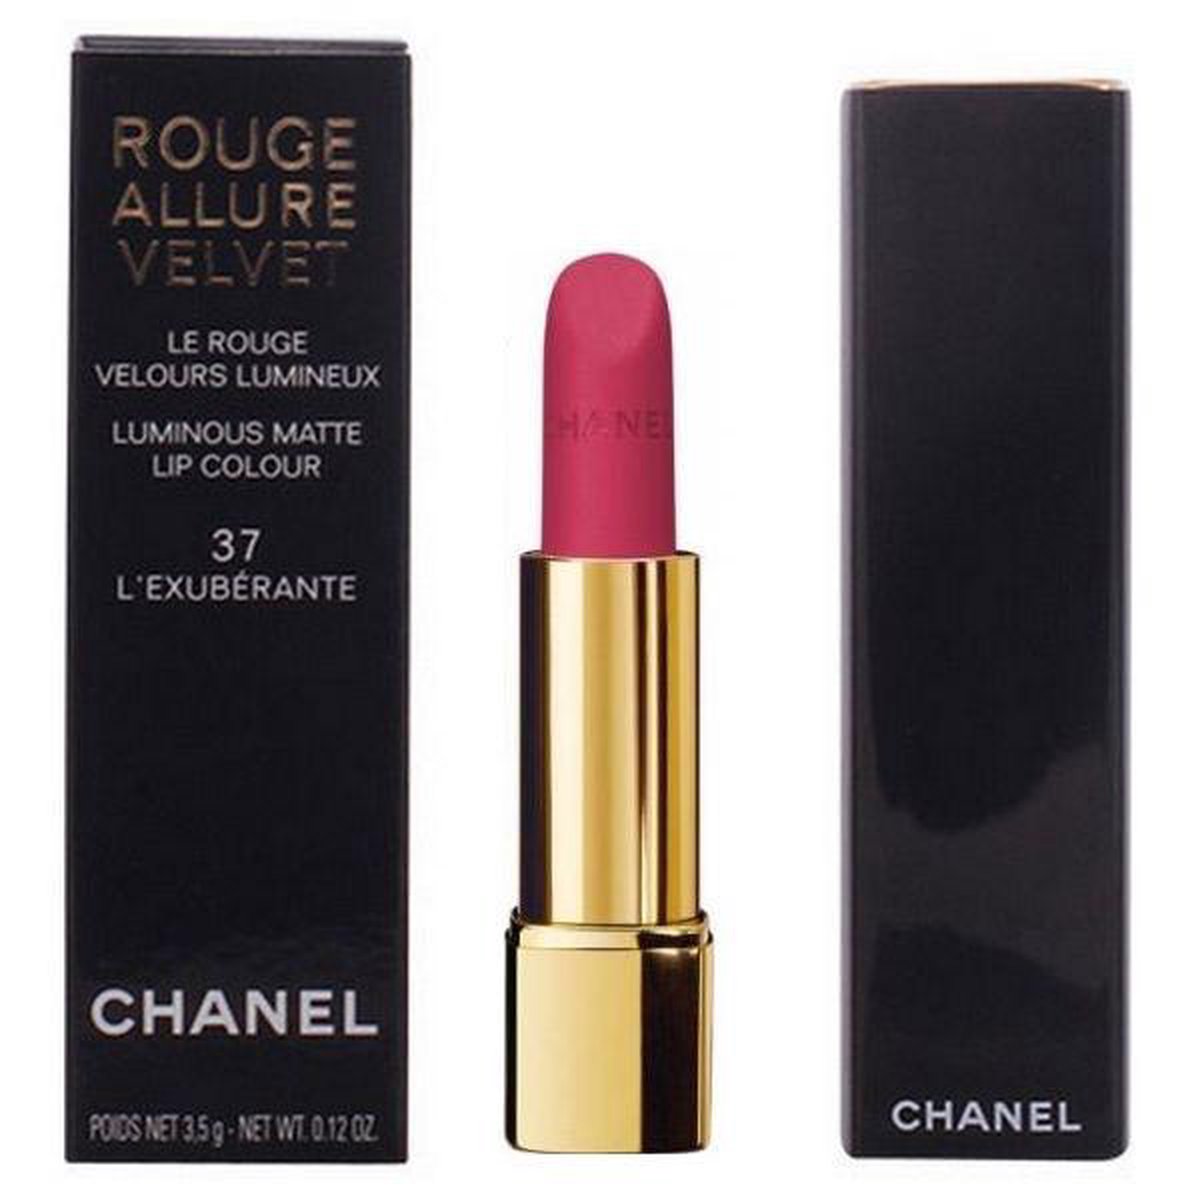 Review Son Chanel 64 First Light Cam Tươi - Rouge Allure Velvet